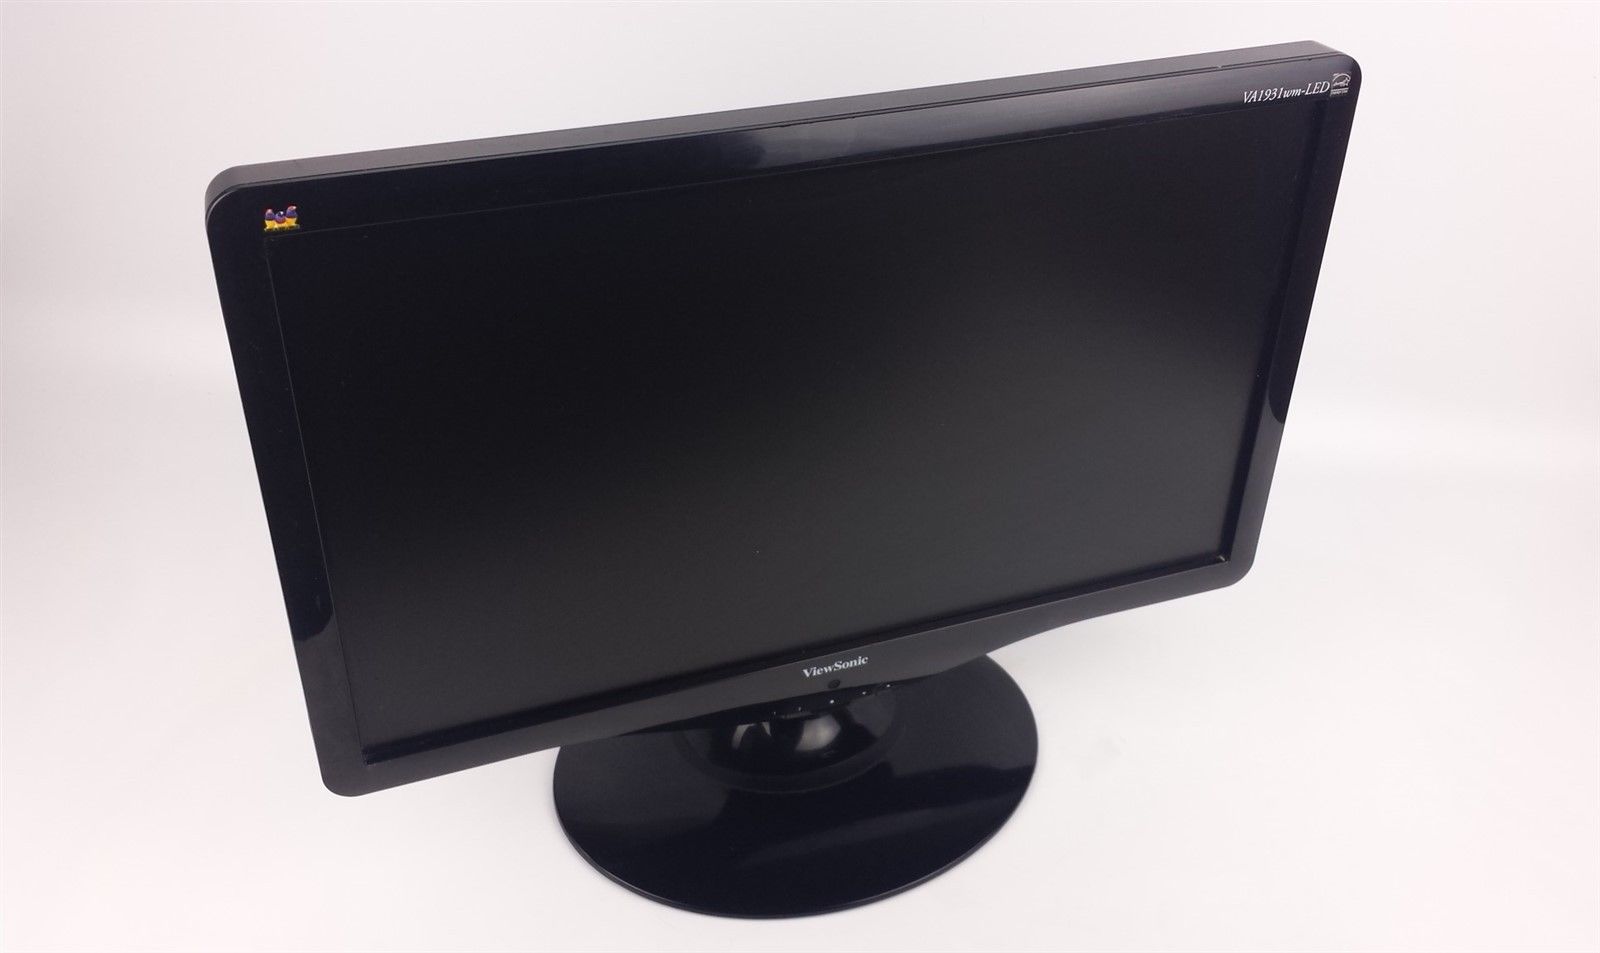 ViewSonic VA1931wm-LED LCD Computer Display Monitor 19" w/ Power & VGA Cord